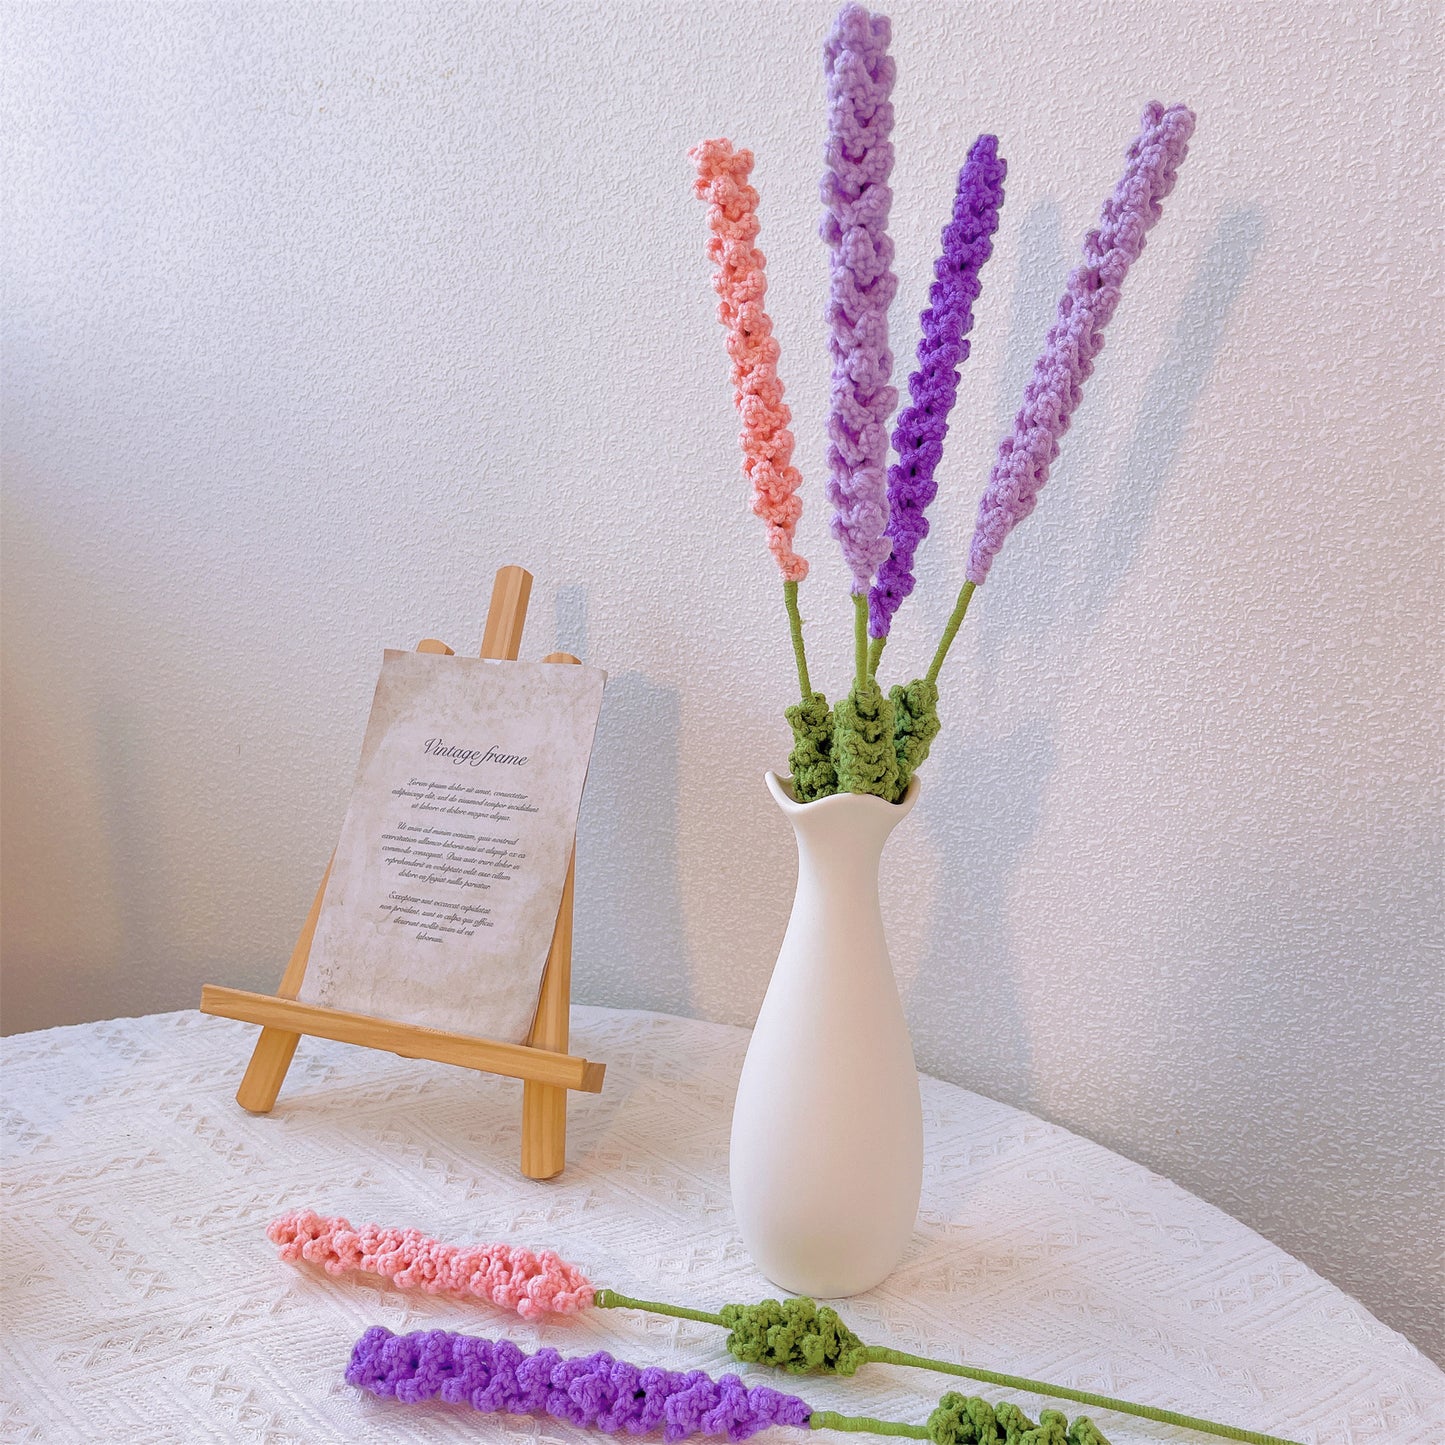 Lavender Serenity: Handcrafted Crochet Lavender Flower Stake for a Calming Garden Decor